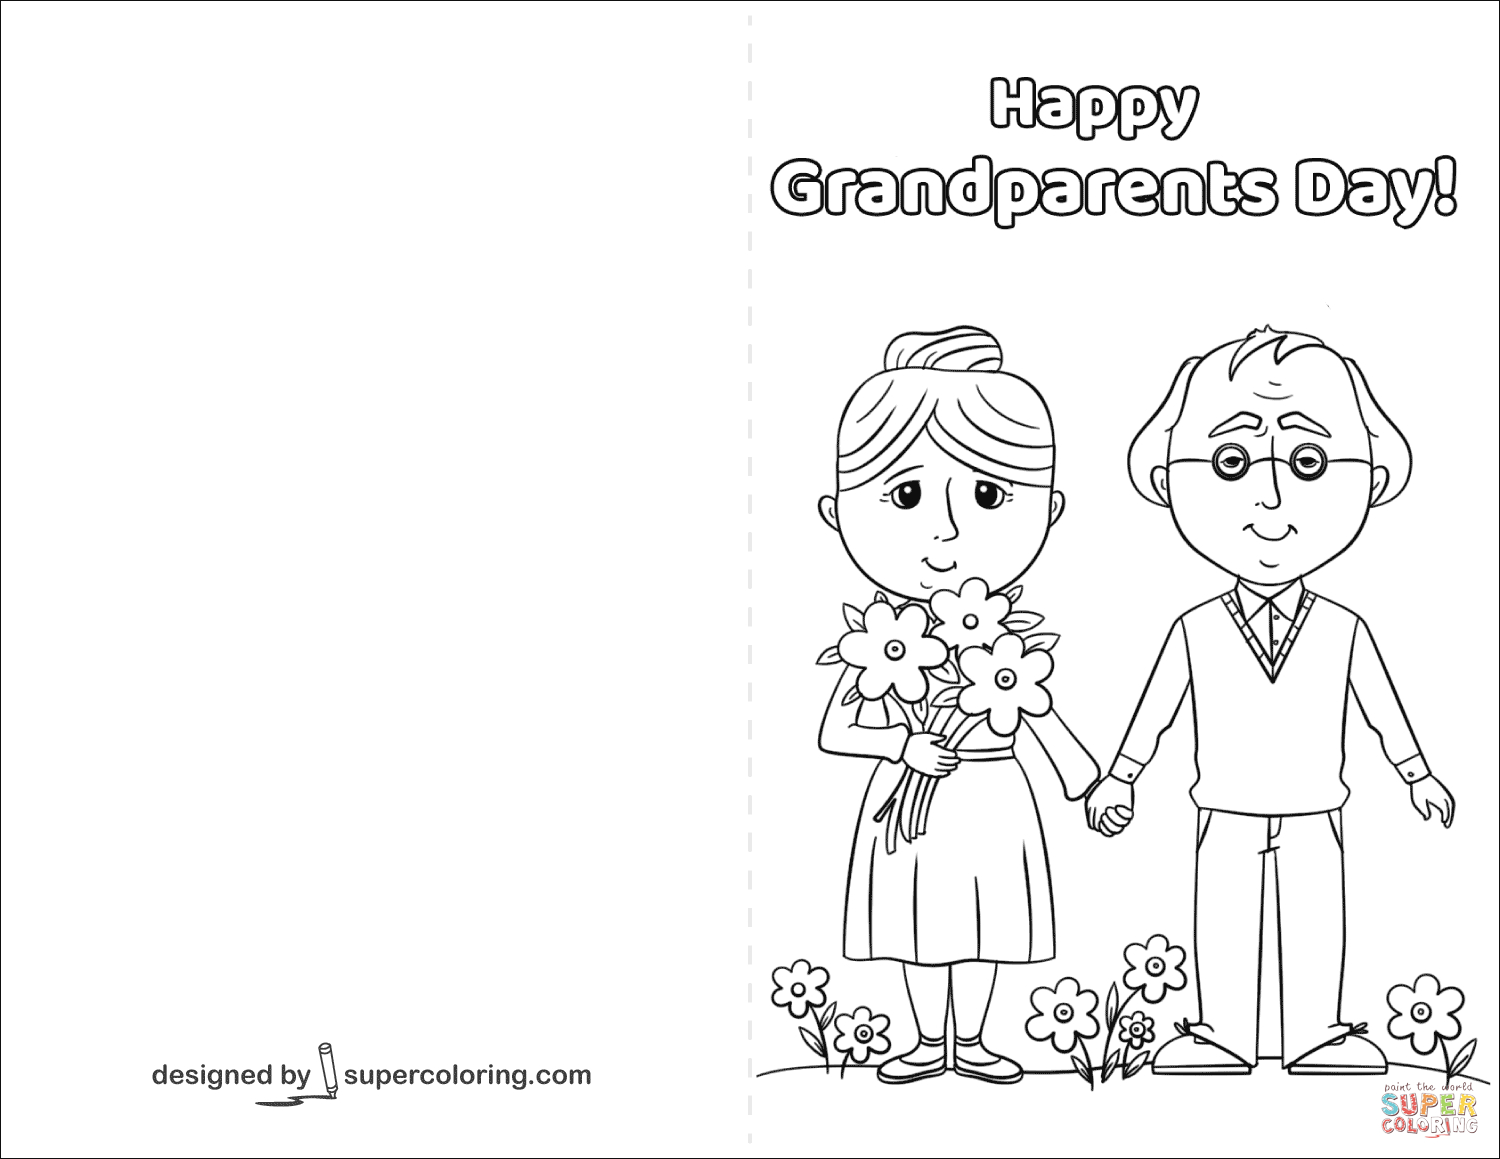 Открытка для бабушки и дедушки раскраска